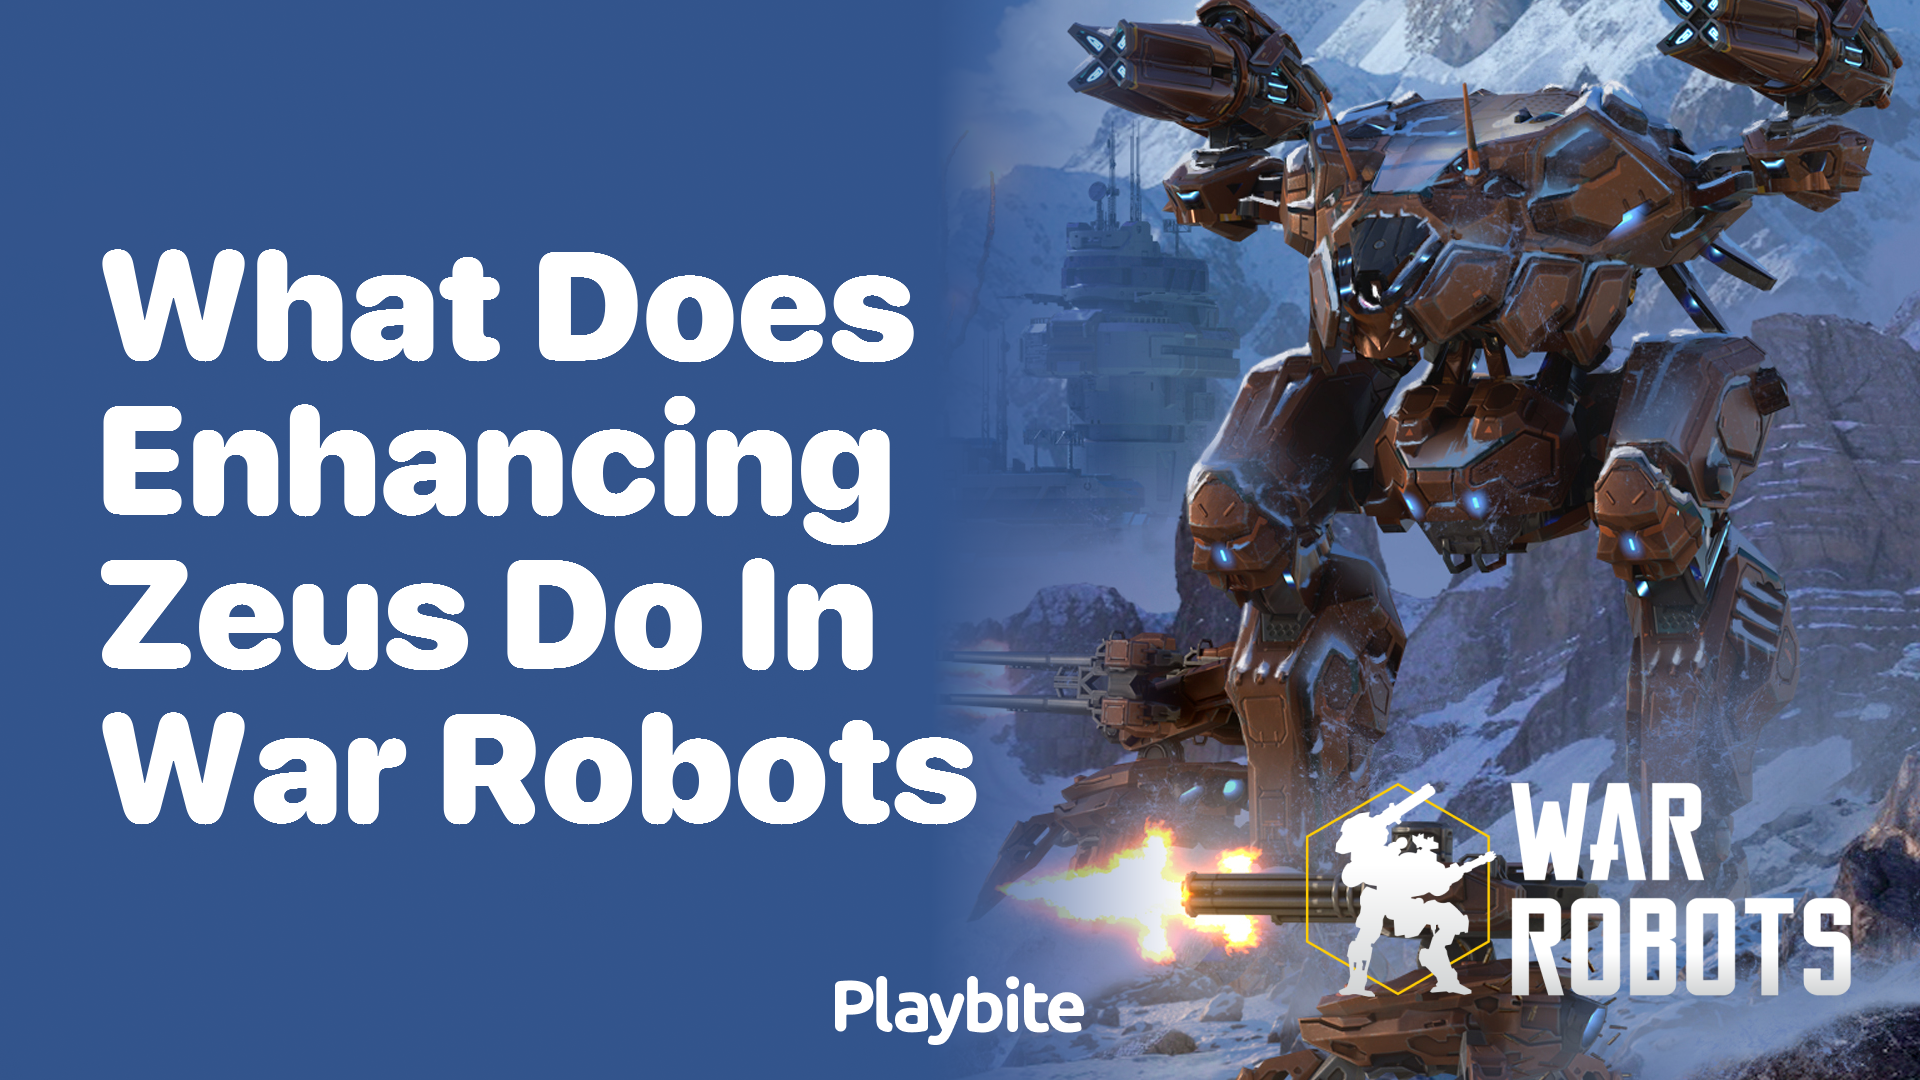 What Does Enhancing Zeus Do in War Robots?